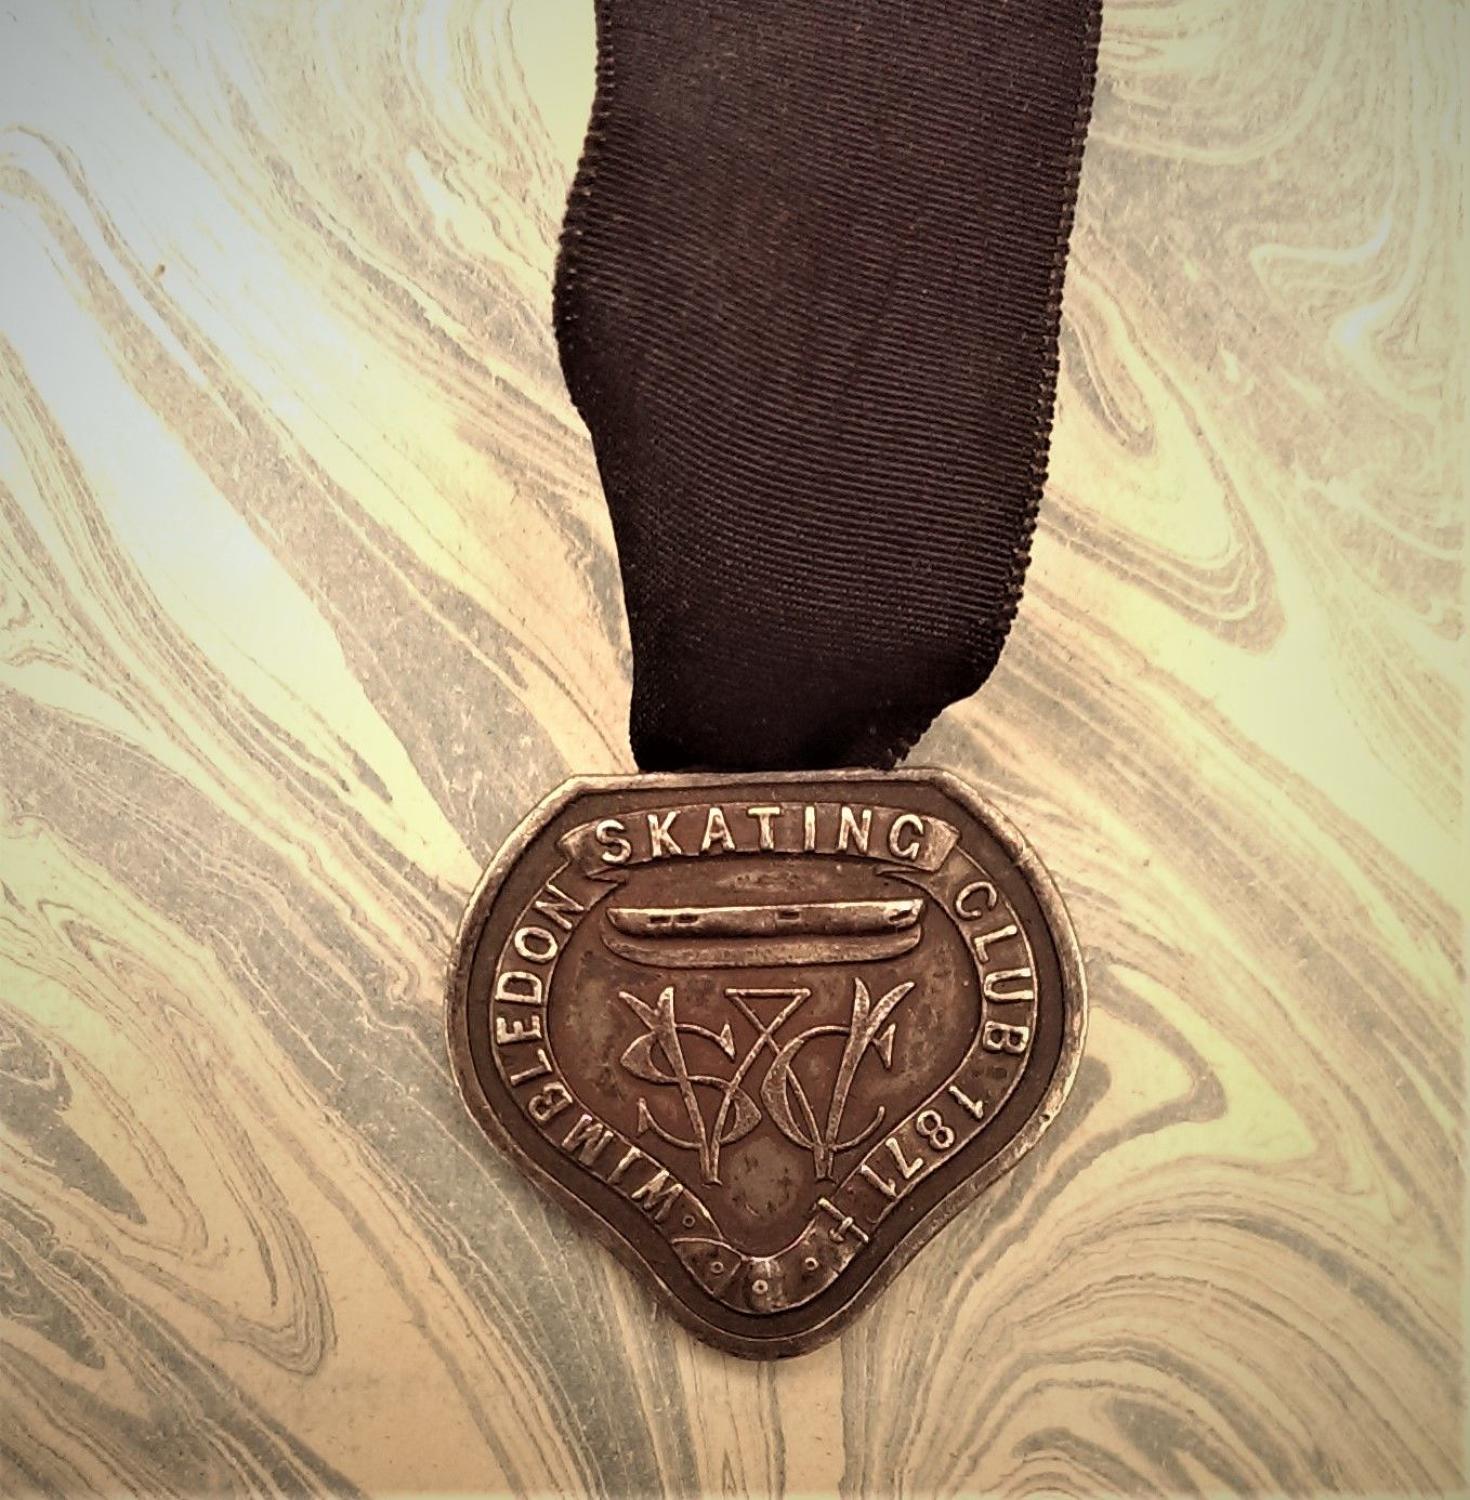 An Exceptionally Rare Wimbledon Skating Club Member's Badge